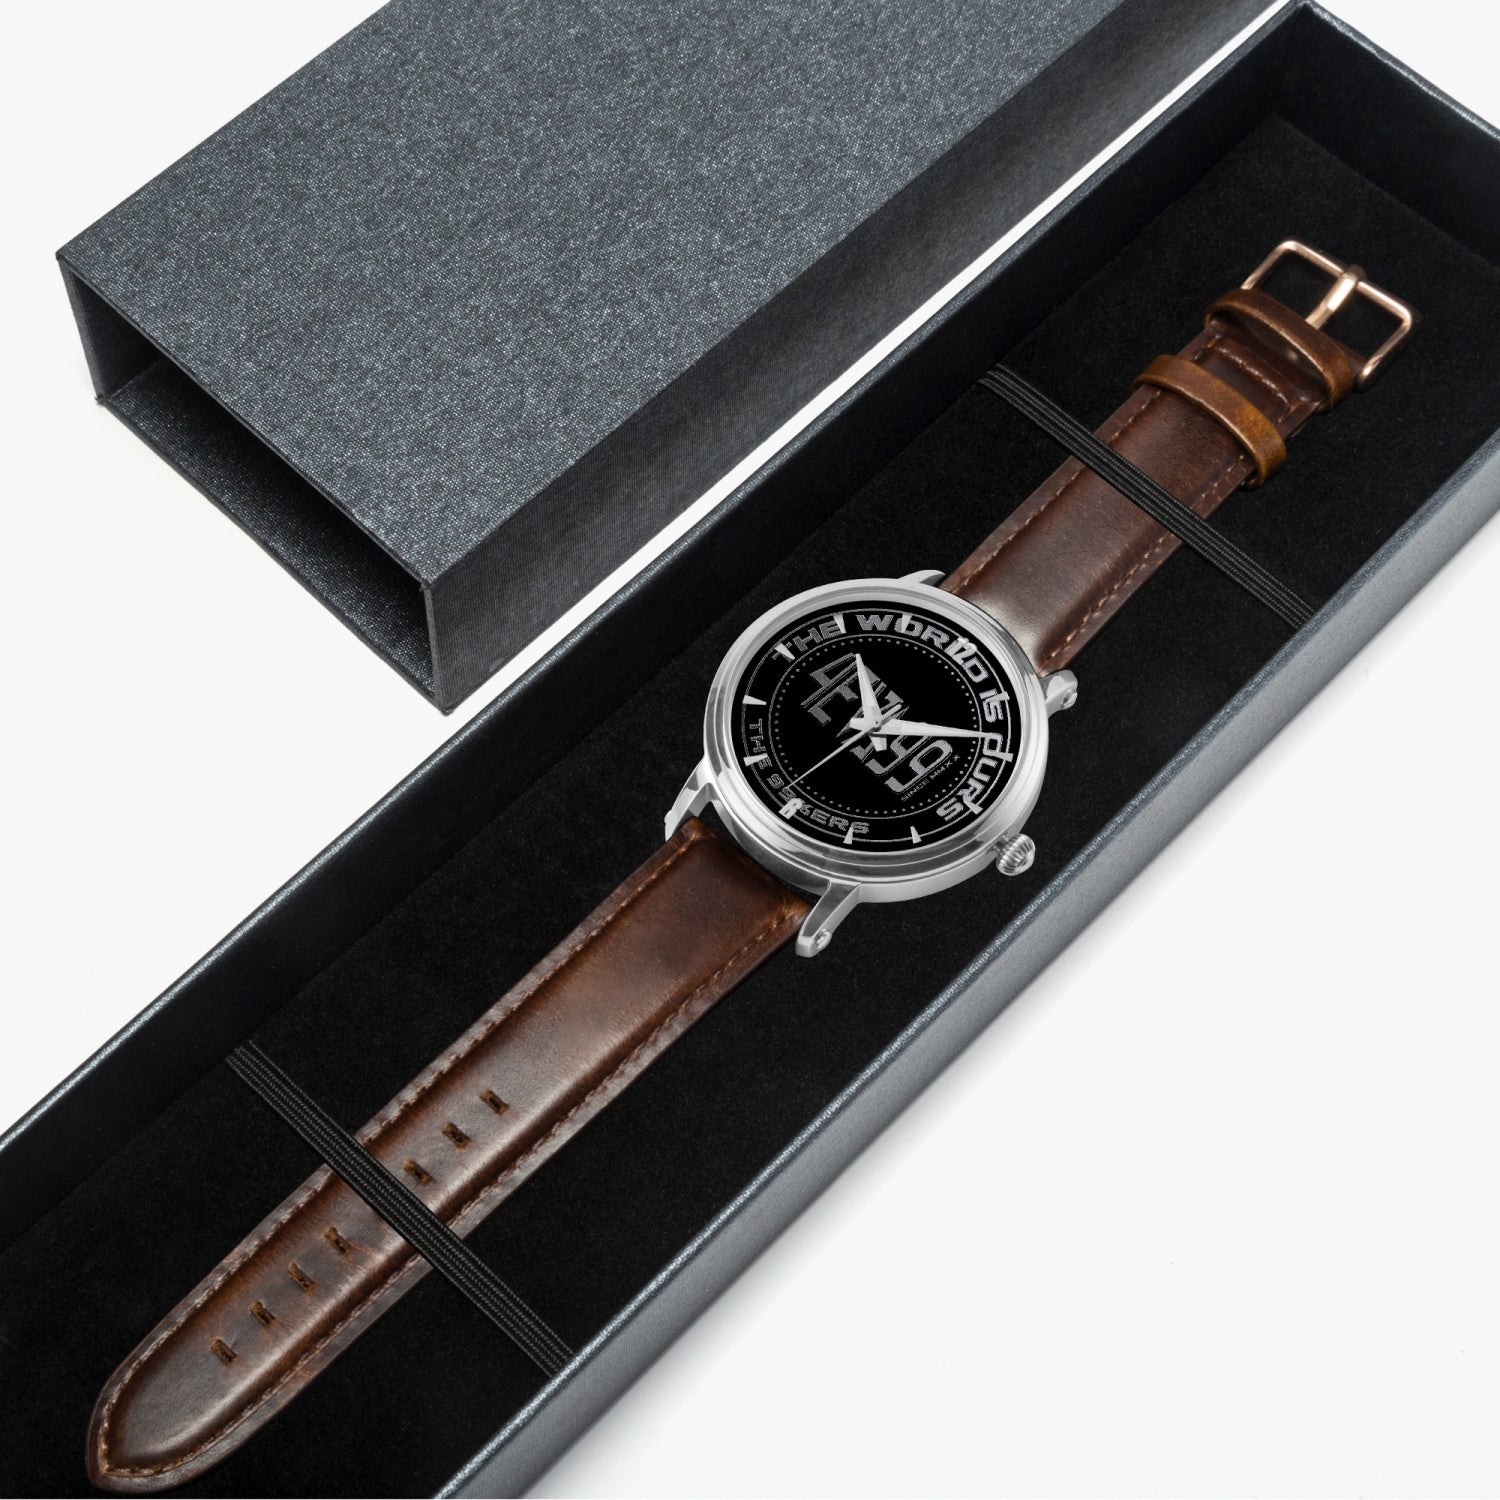 EMBLEM 159. 46mm Unisex Automatic Watch (Silver)